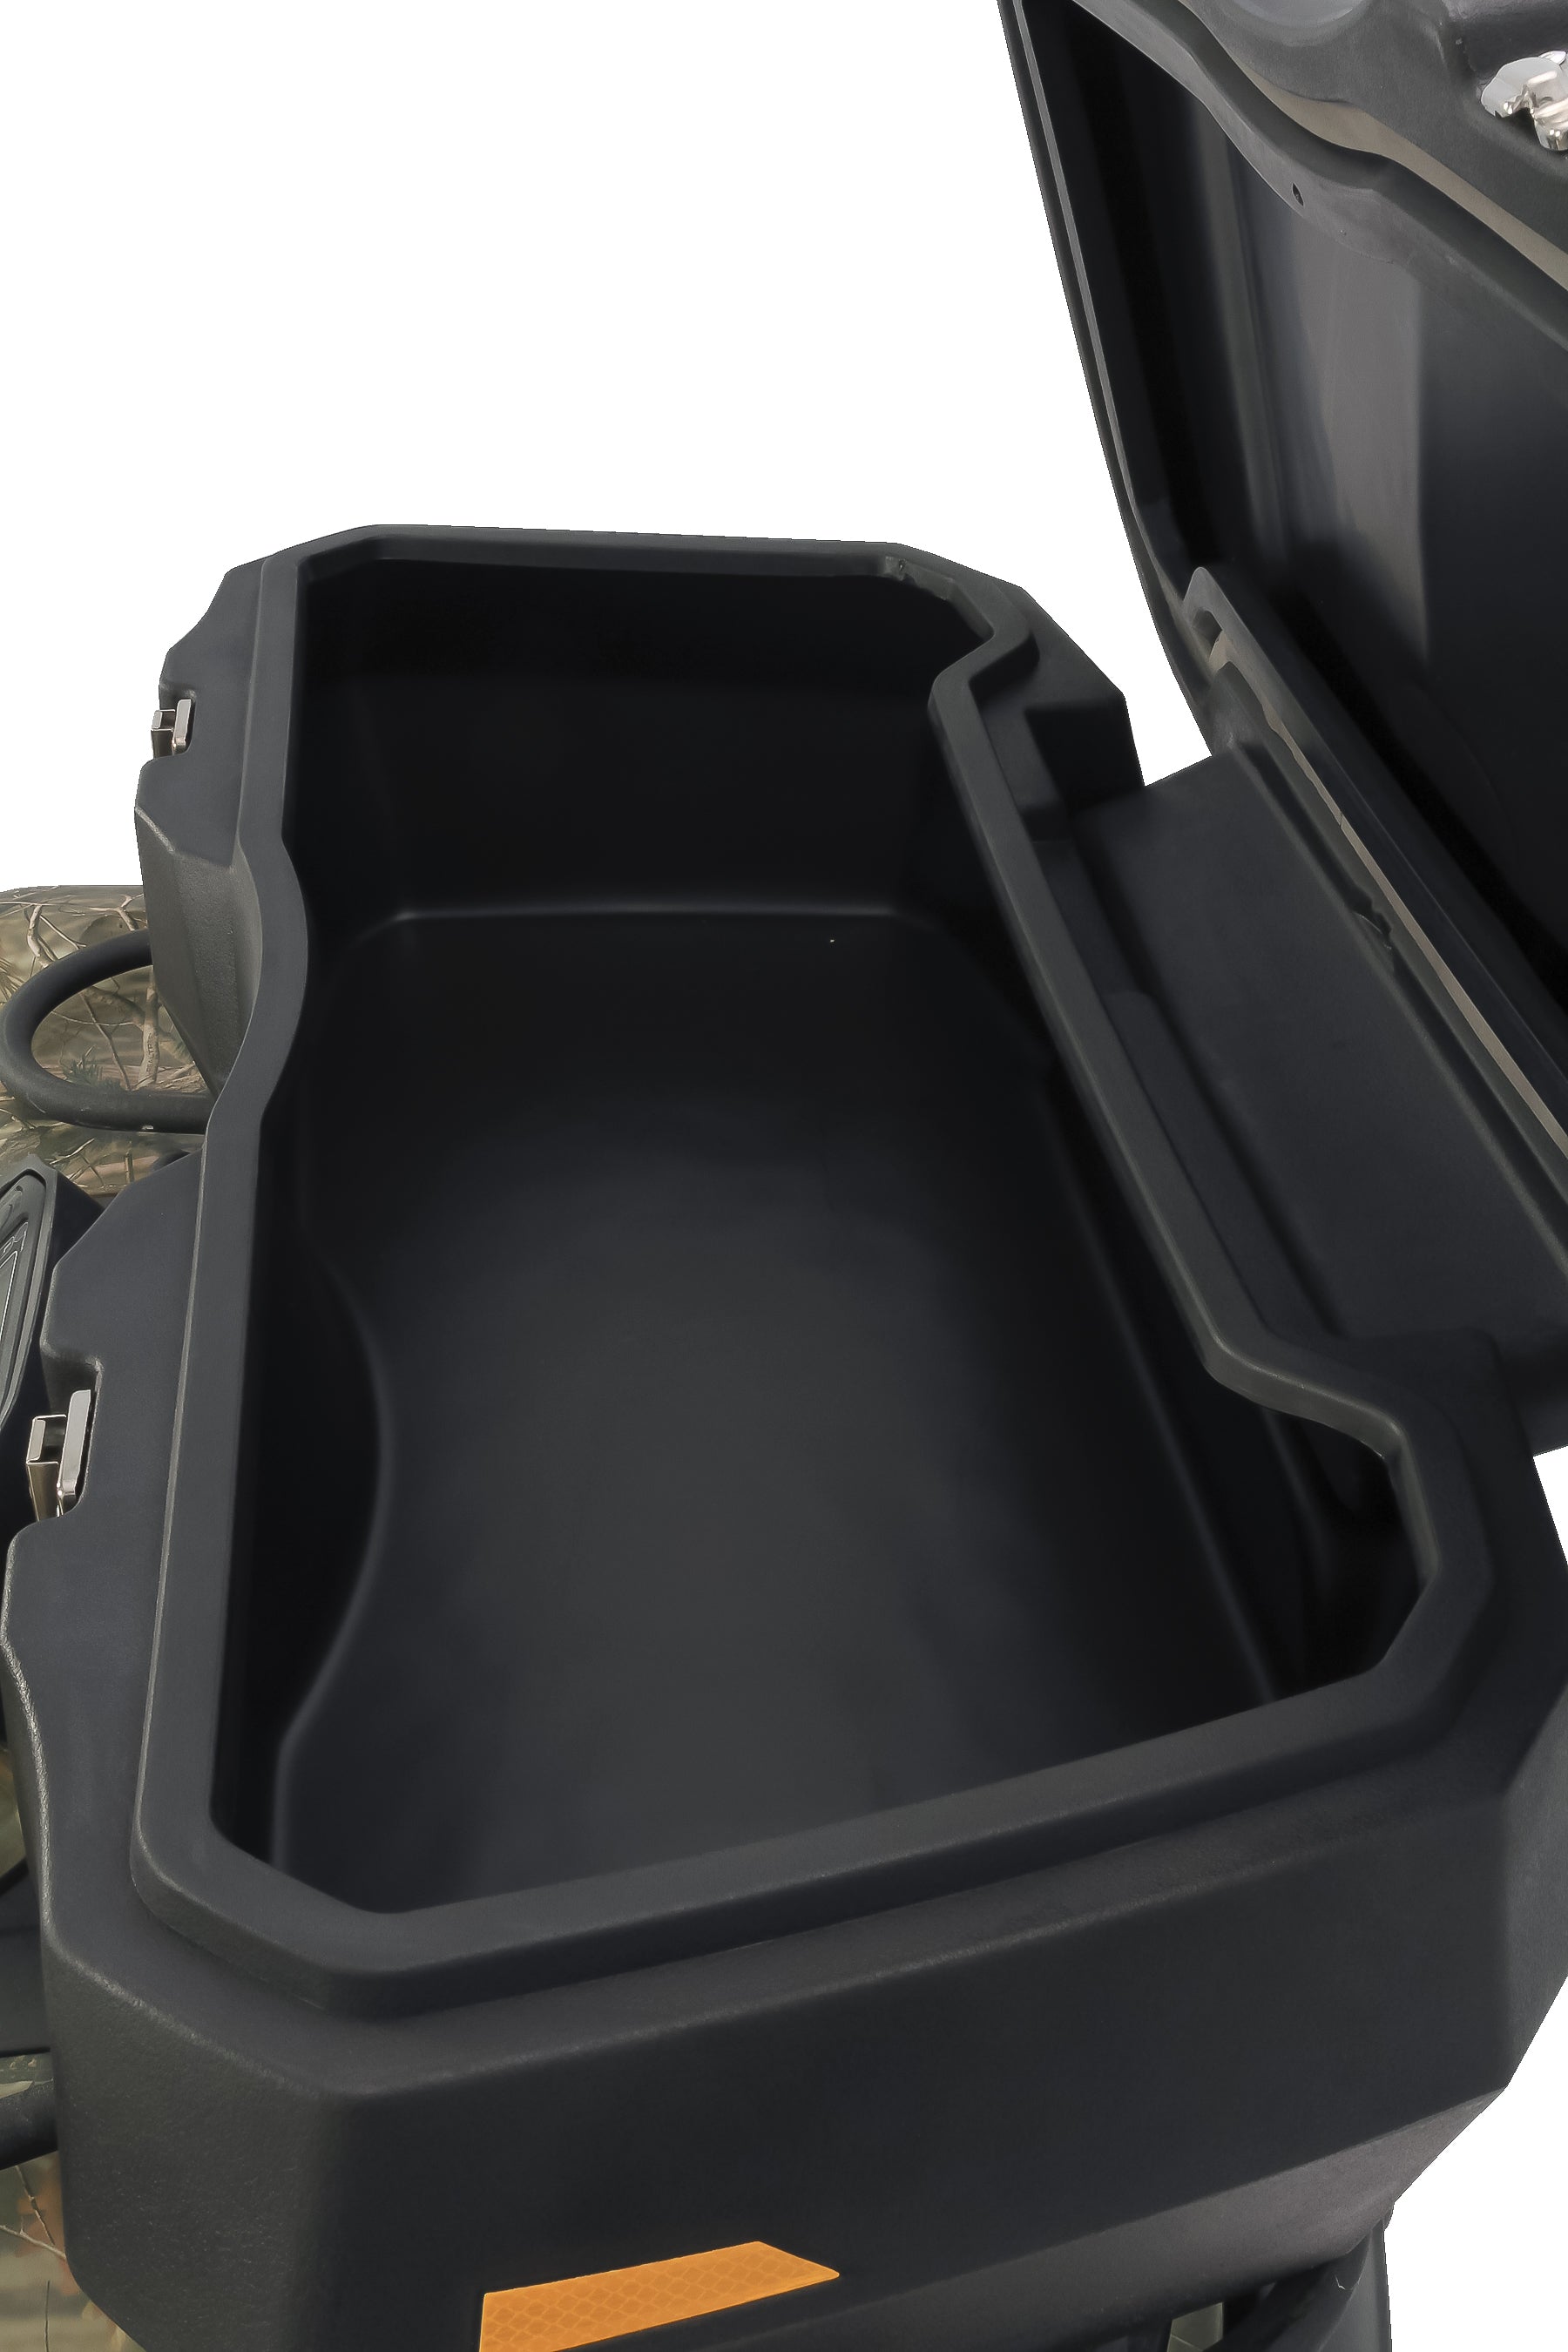 Black Widow Locking ATV Cargo Box